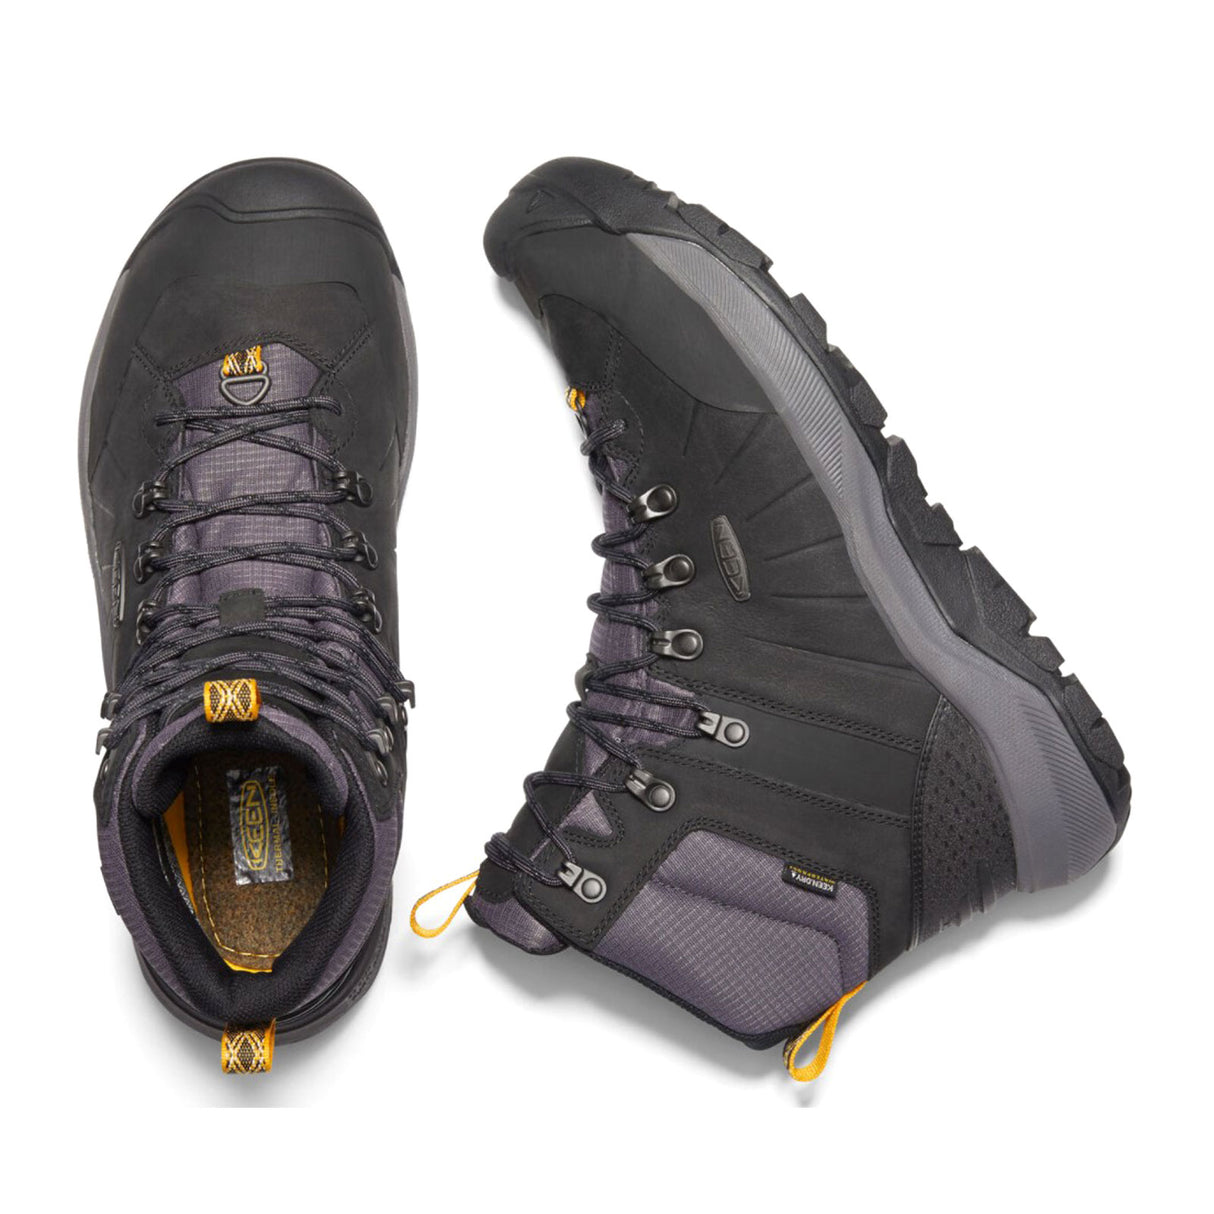 Keen Revel IV Mid Polar Boot (Men) - Black/Magnet Boots - Winter - Mid Boot - The Heel Shoe Fitters